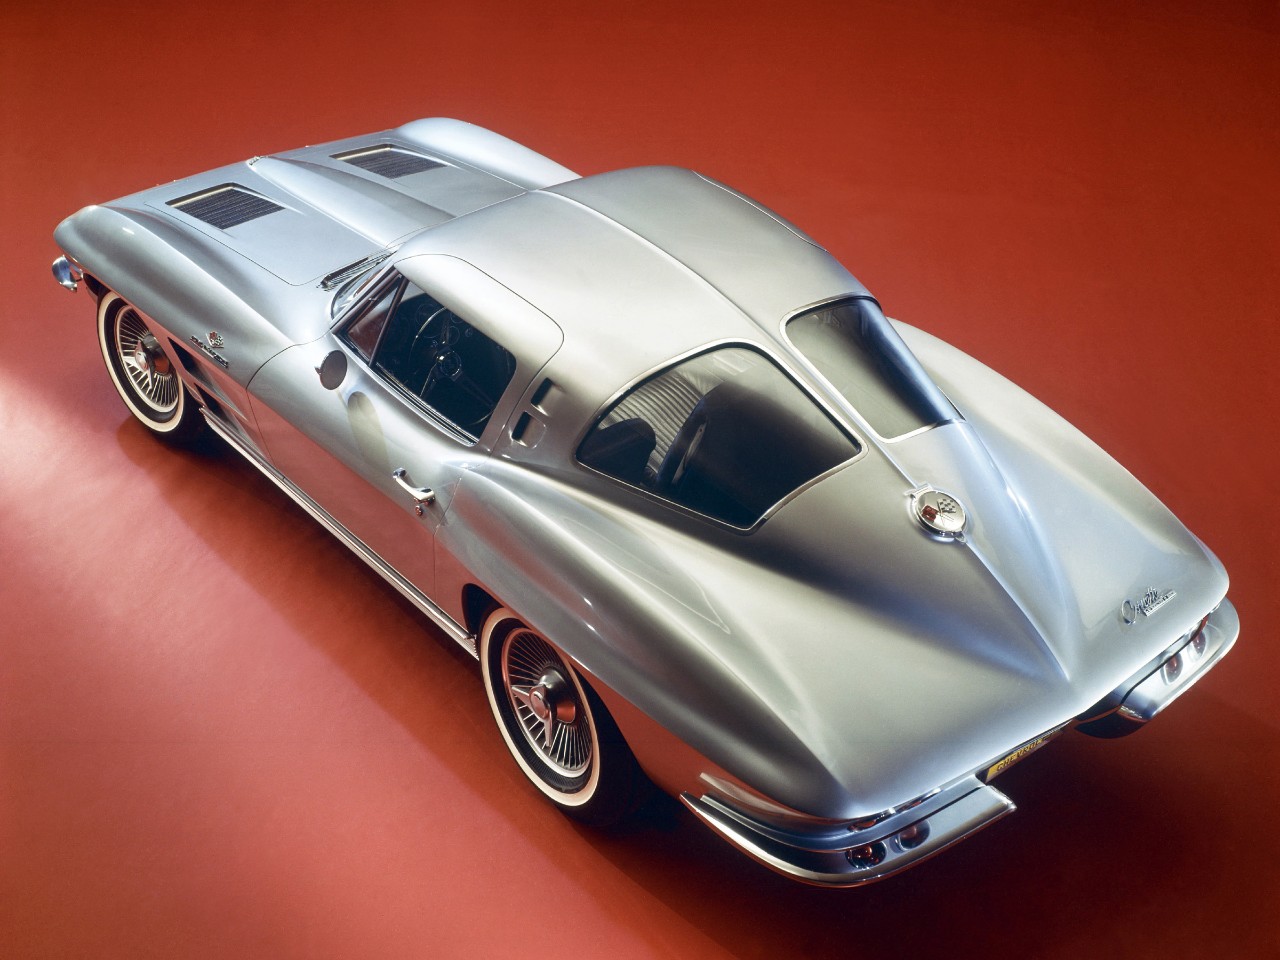 1963 Chevrolet Corvette rear shot displaying iconic split window rear end